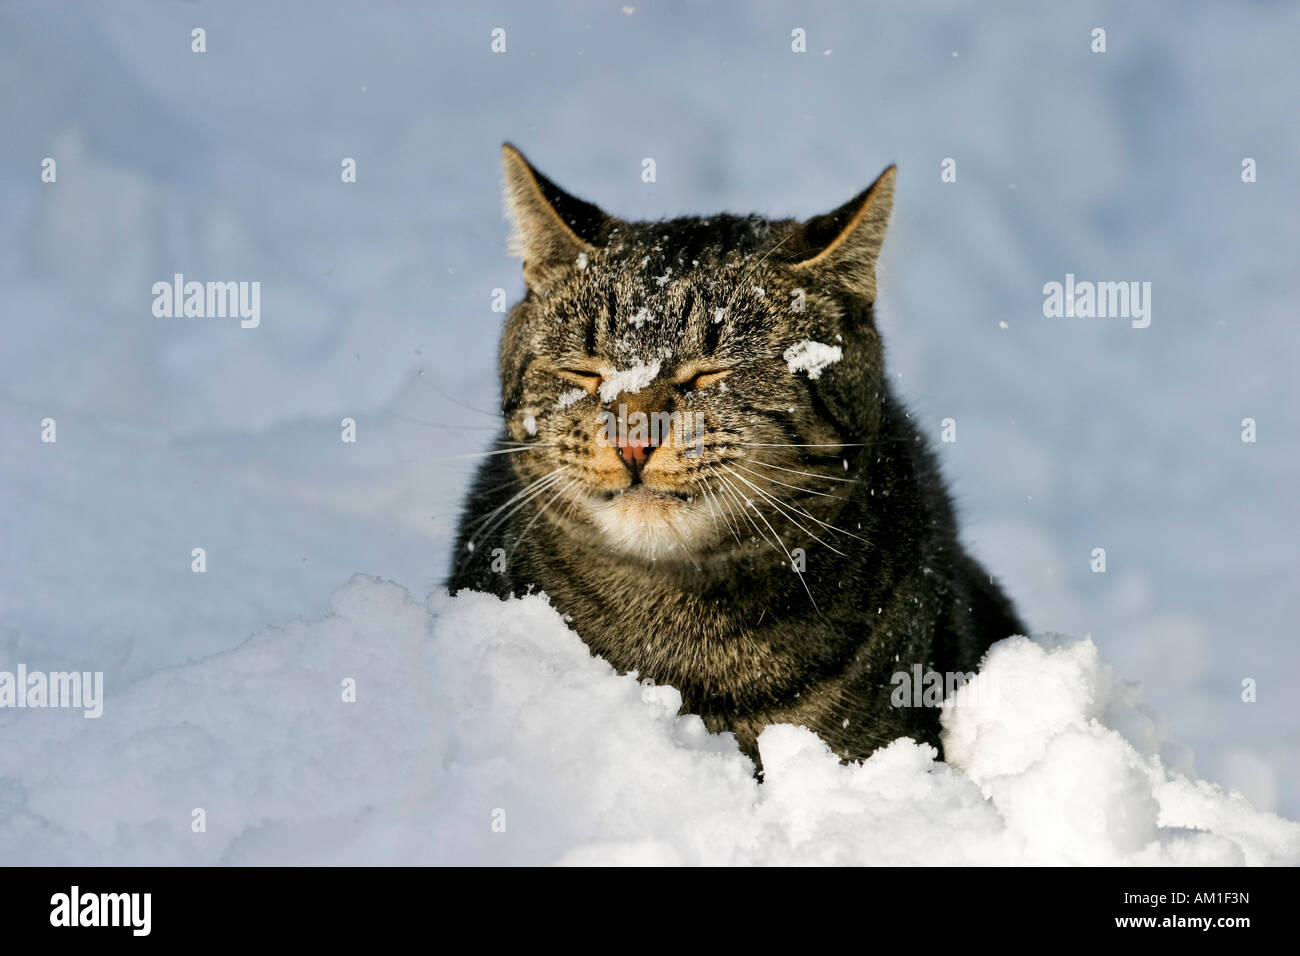 European shorthair cat in snow Stock Photo